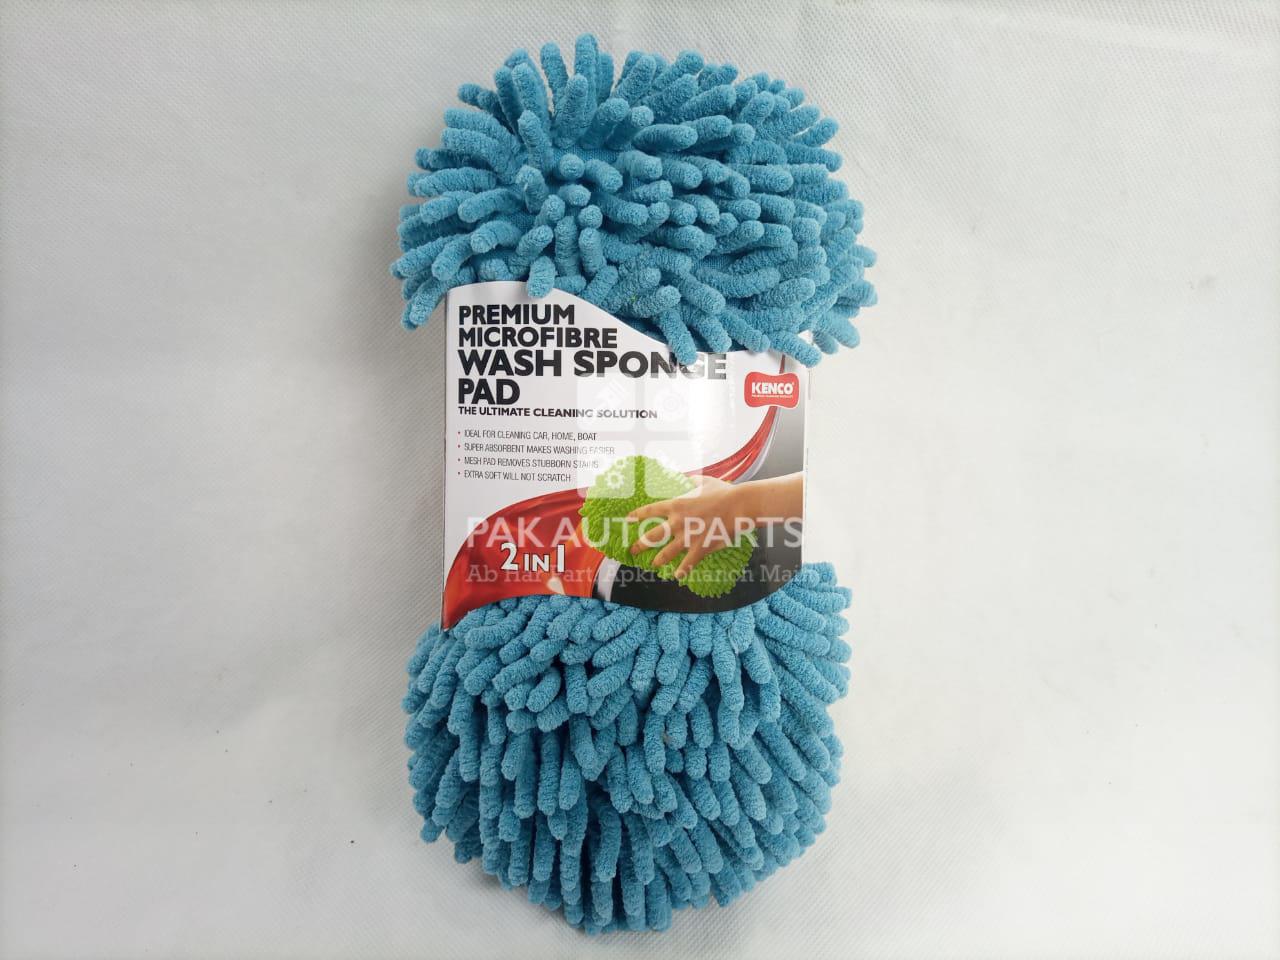 Picture of Kenco Premium Microfiber Wash Sponge Pad (2 in 1)